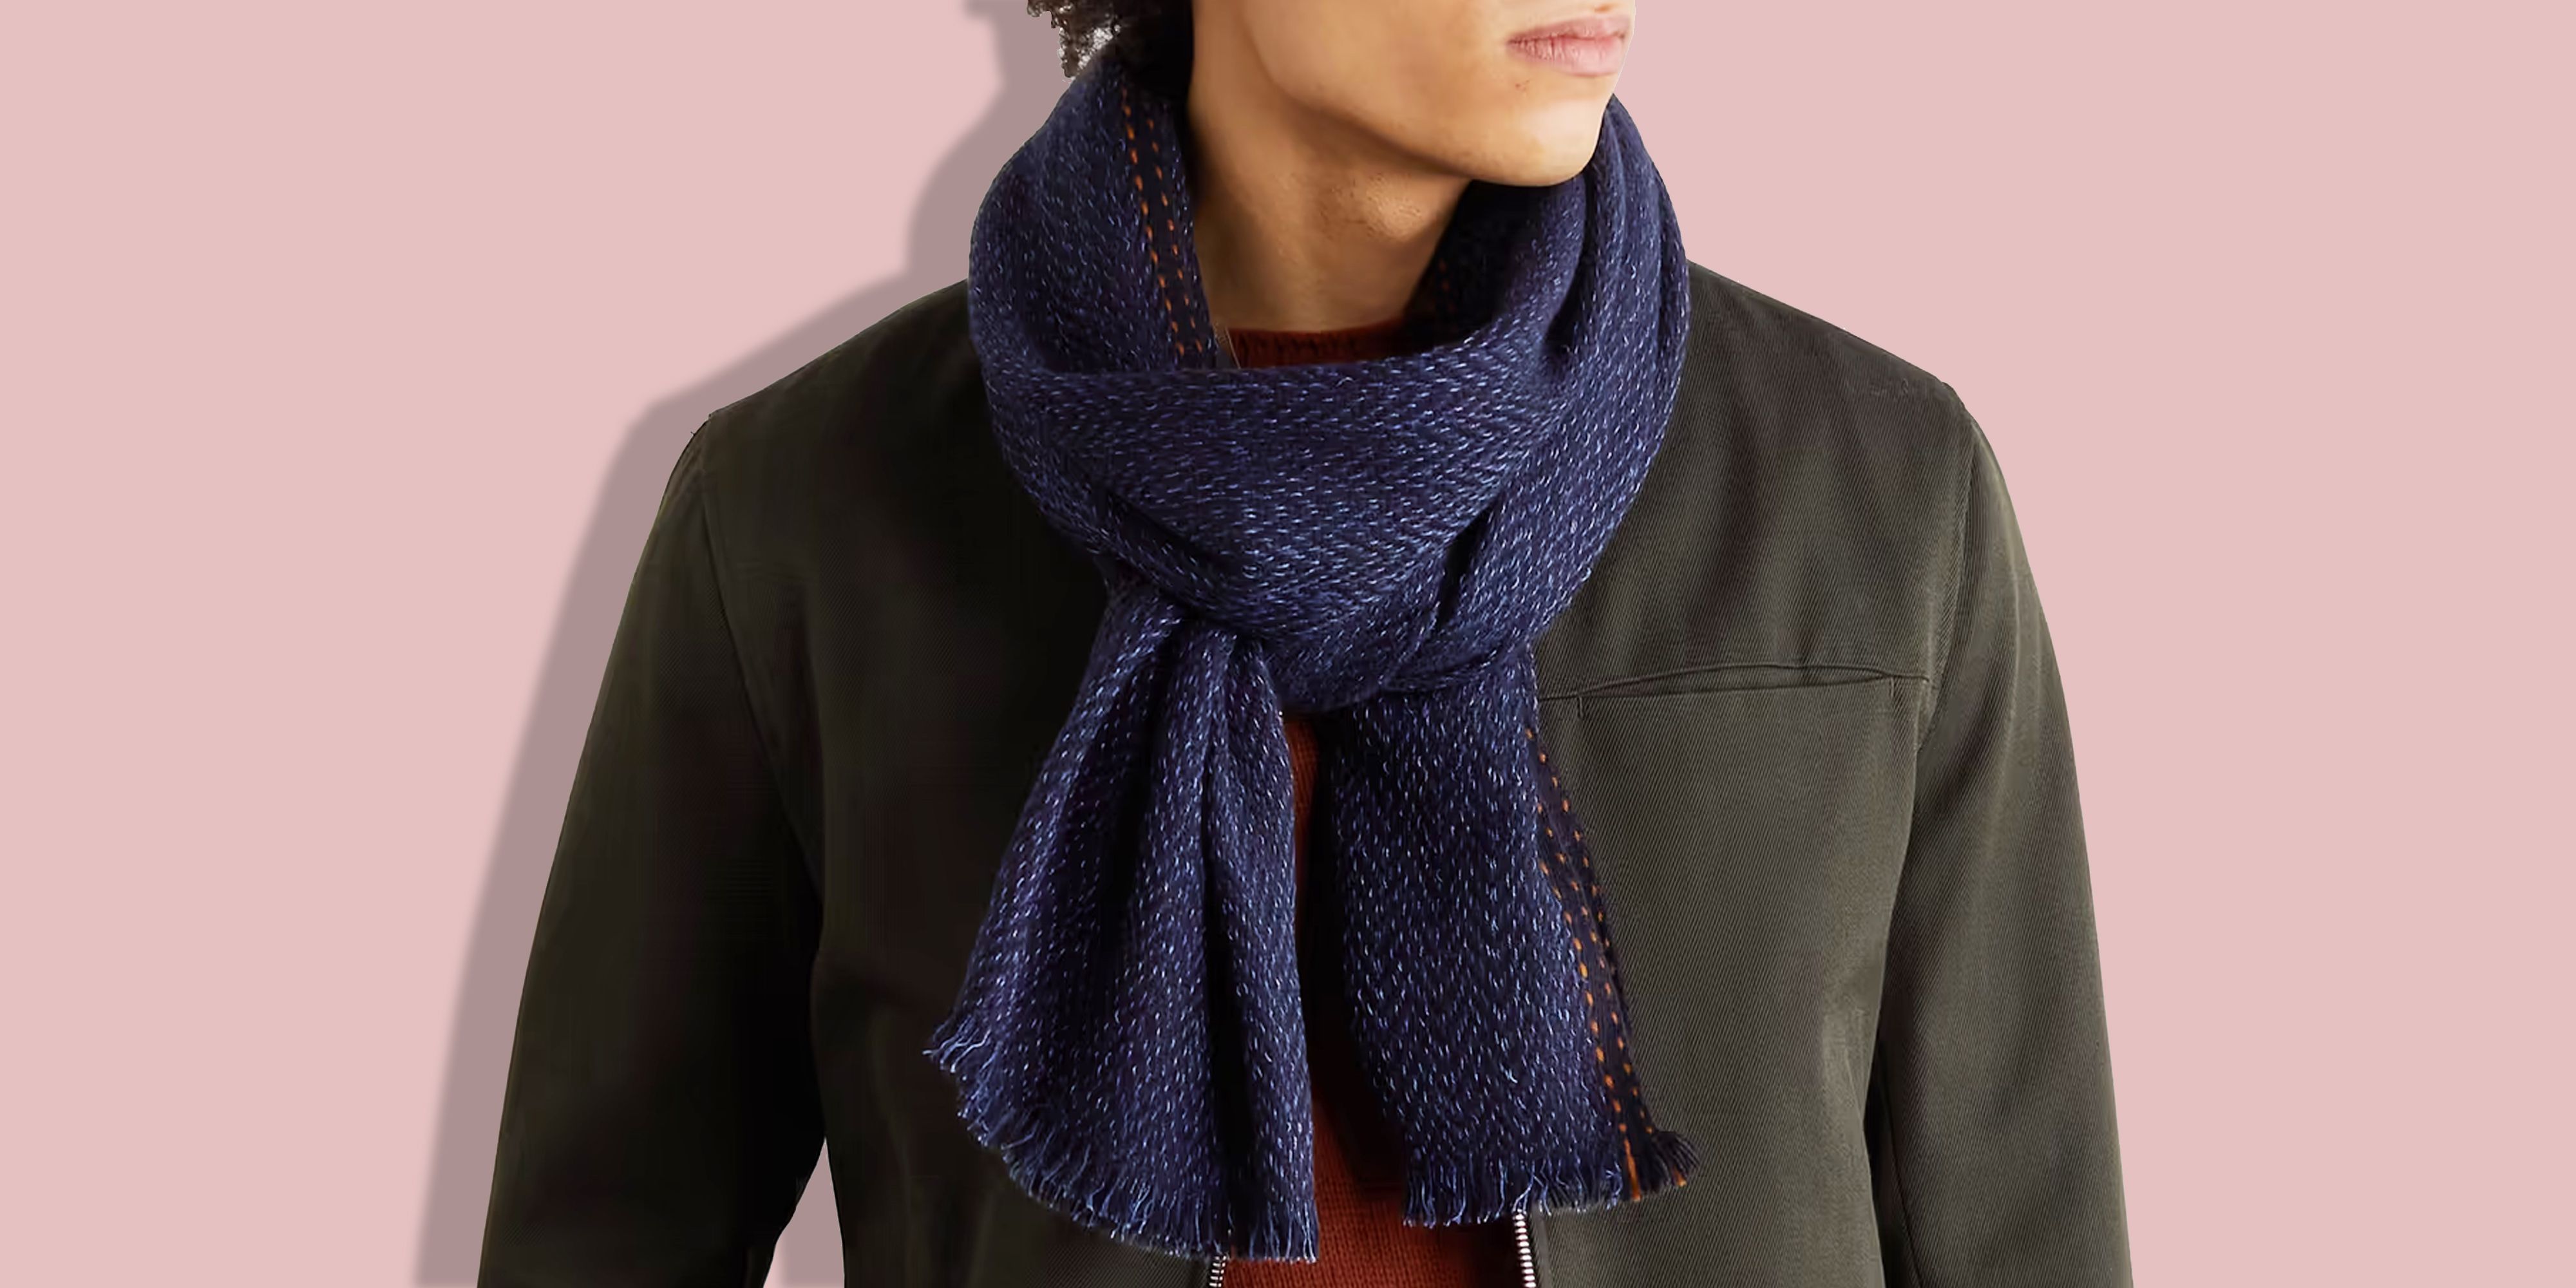 Suede Microfiber Mens Silk Scarf - Designer neck scarf for winters